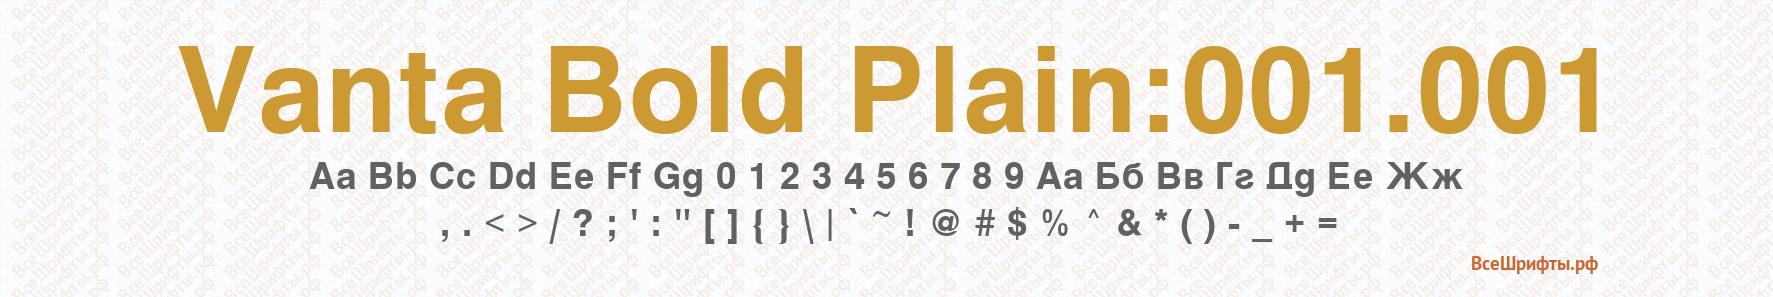 Шрифт Vanta Bold Plain:001.001